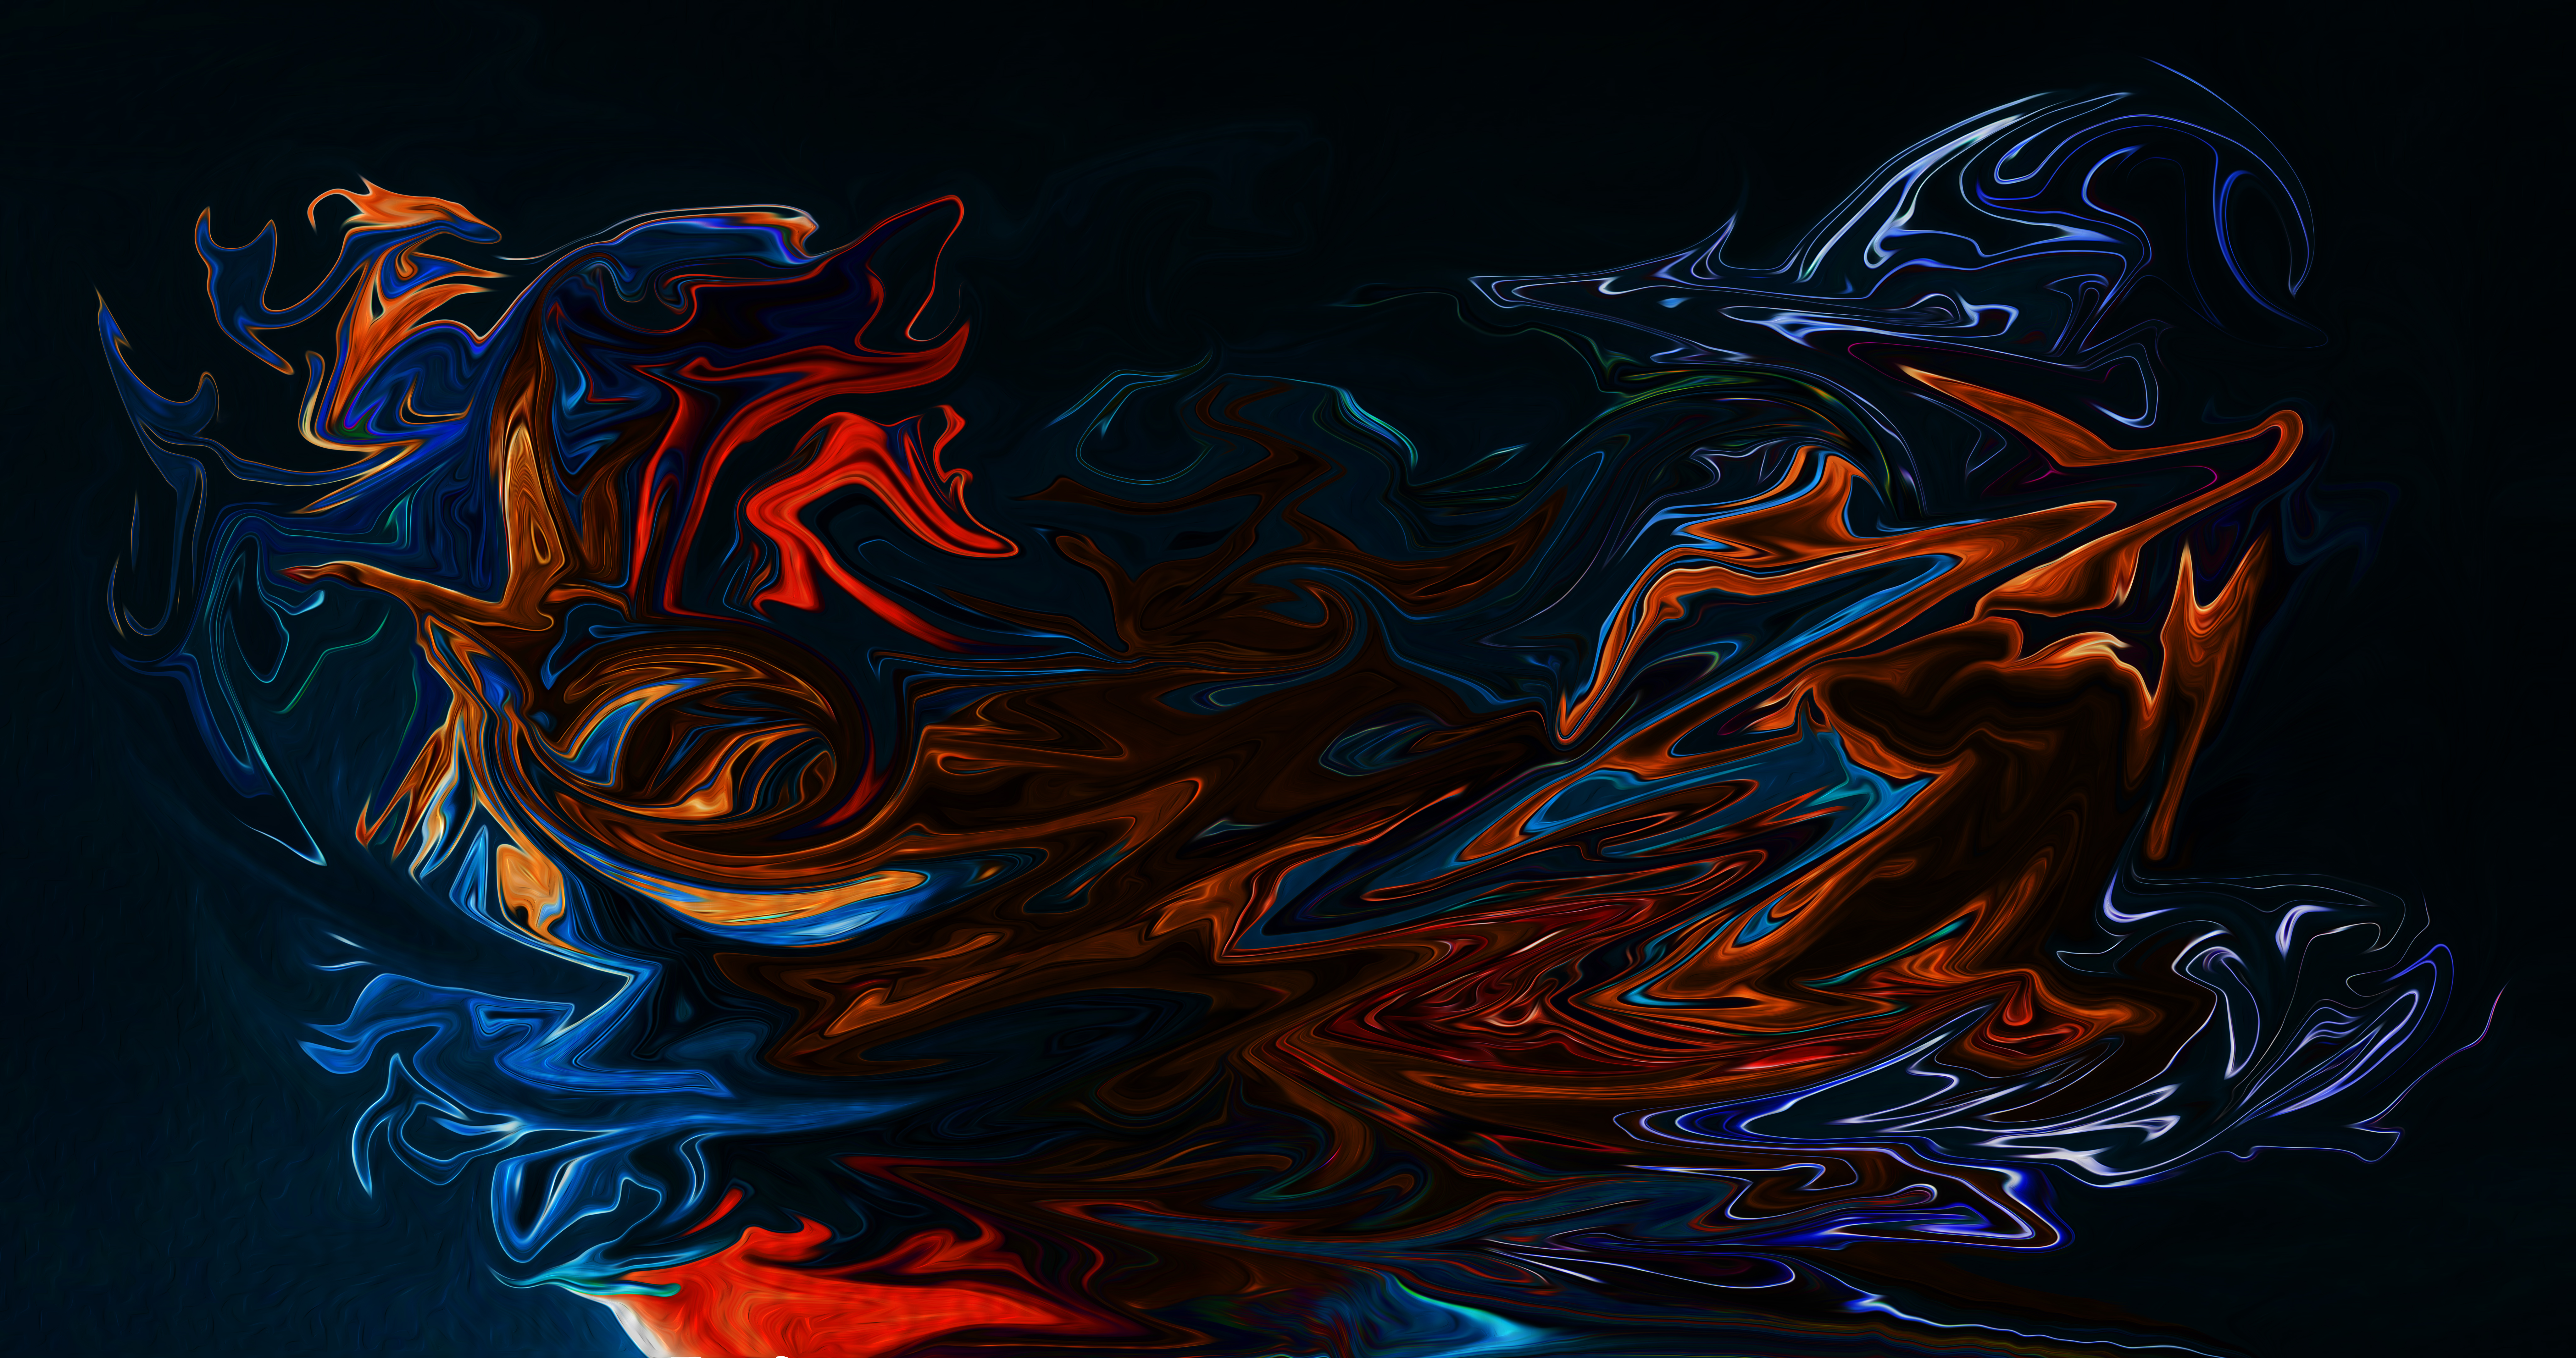 Abstract Fluid Liquid Dark Black Background Colorful Artwork Digital Art Oil Painting Paint Splash P 8192x4320